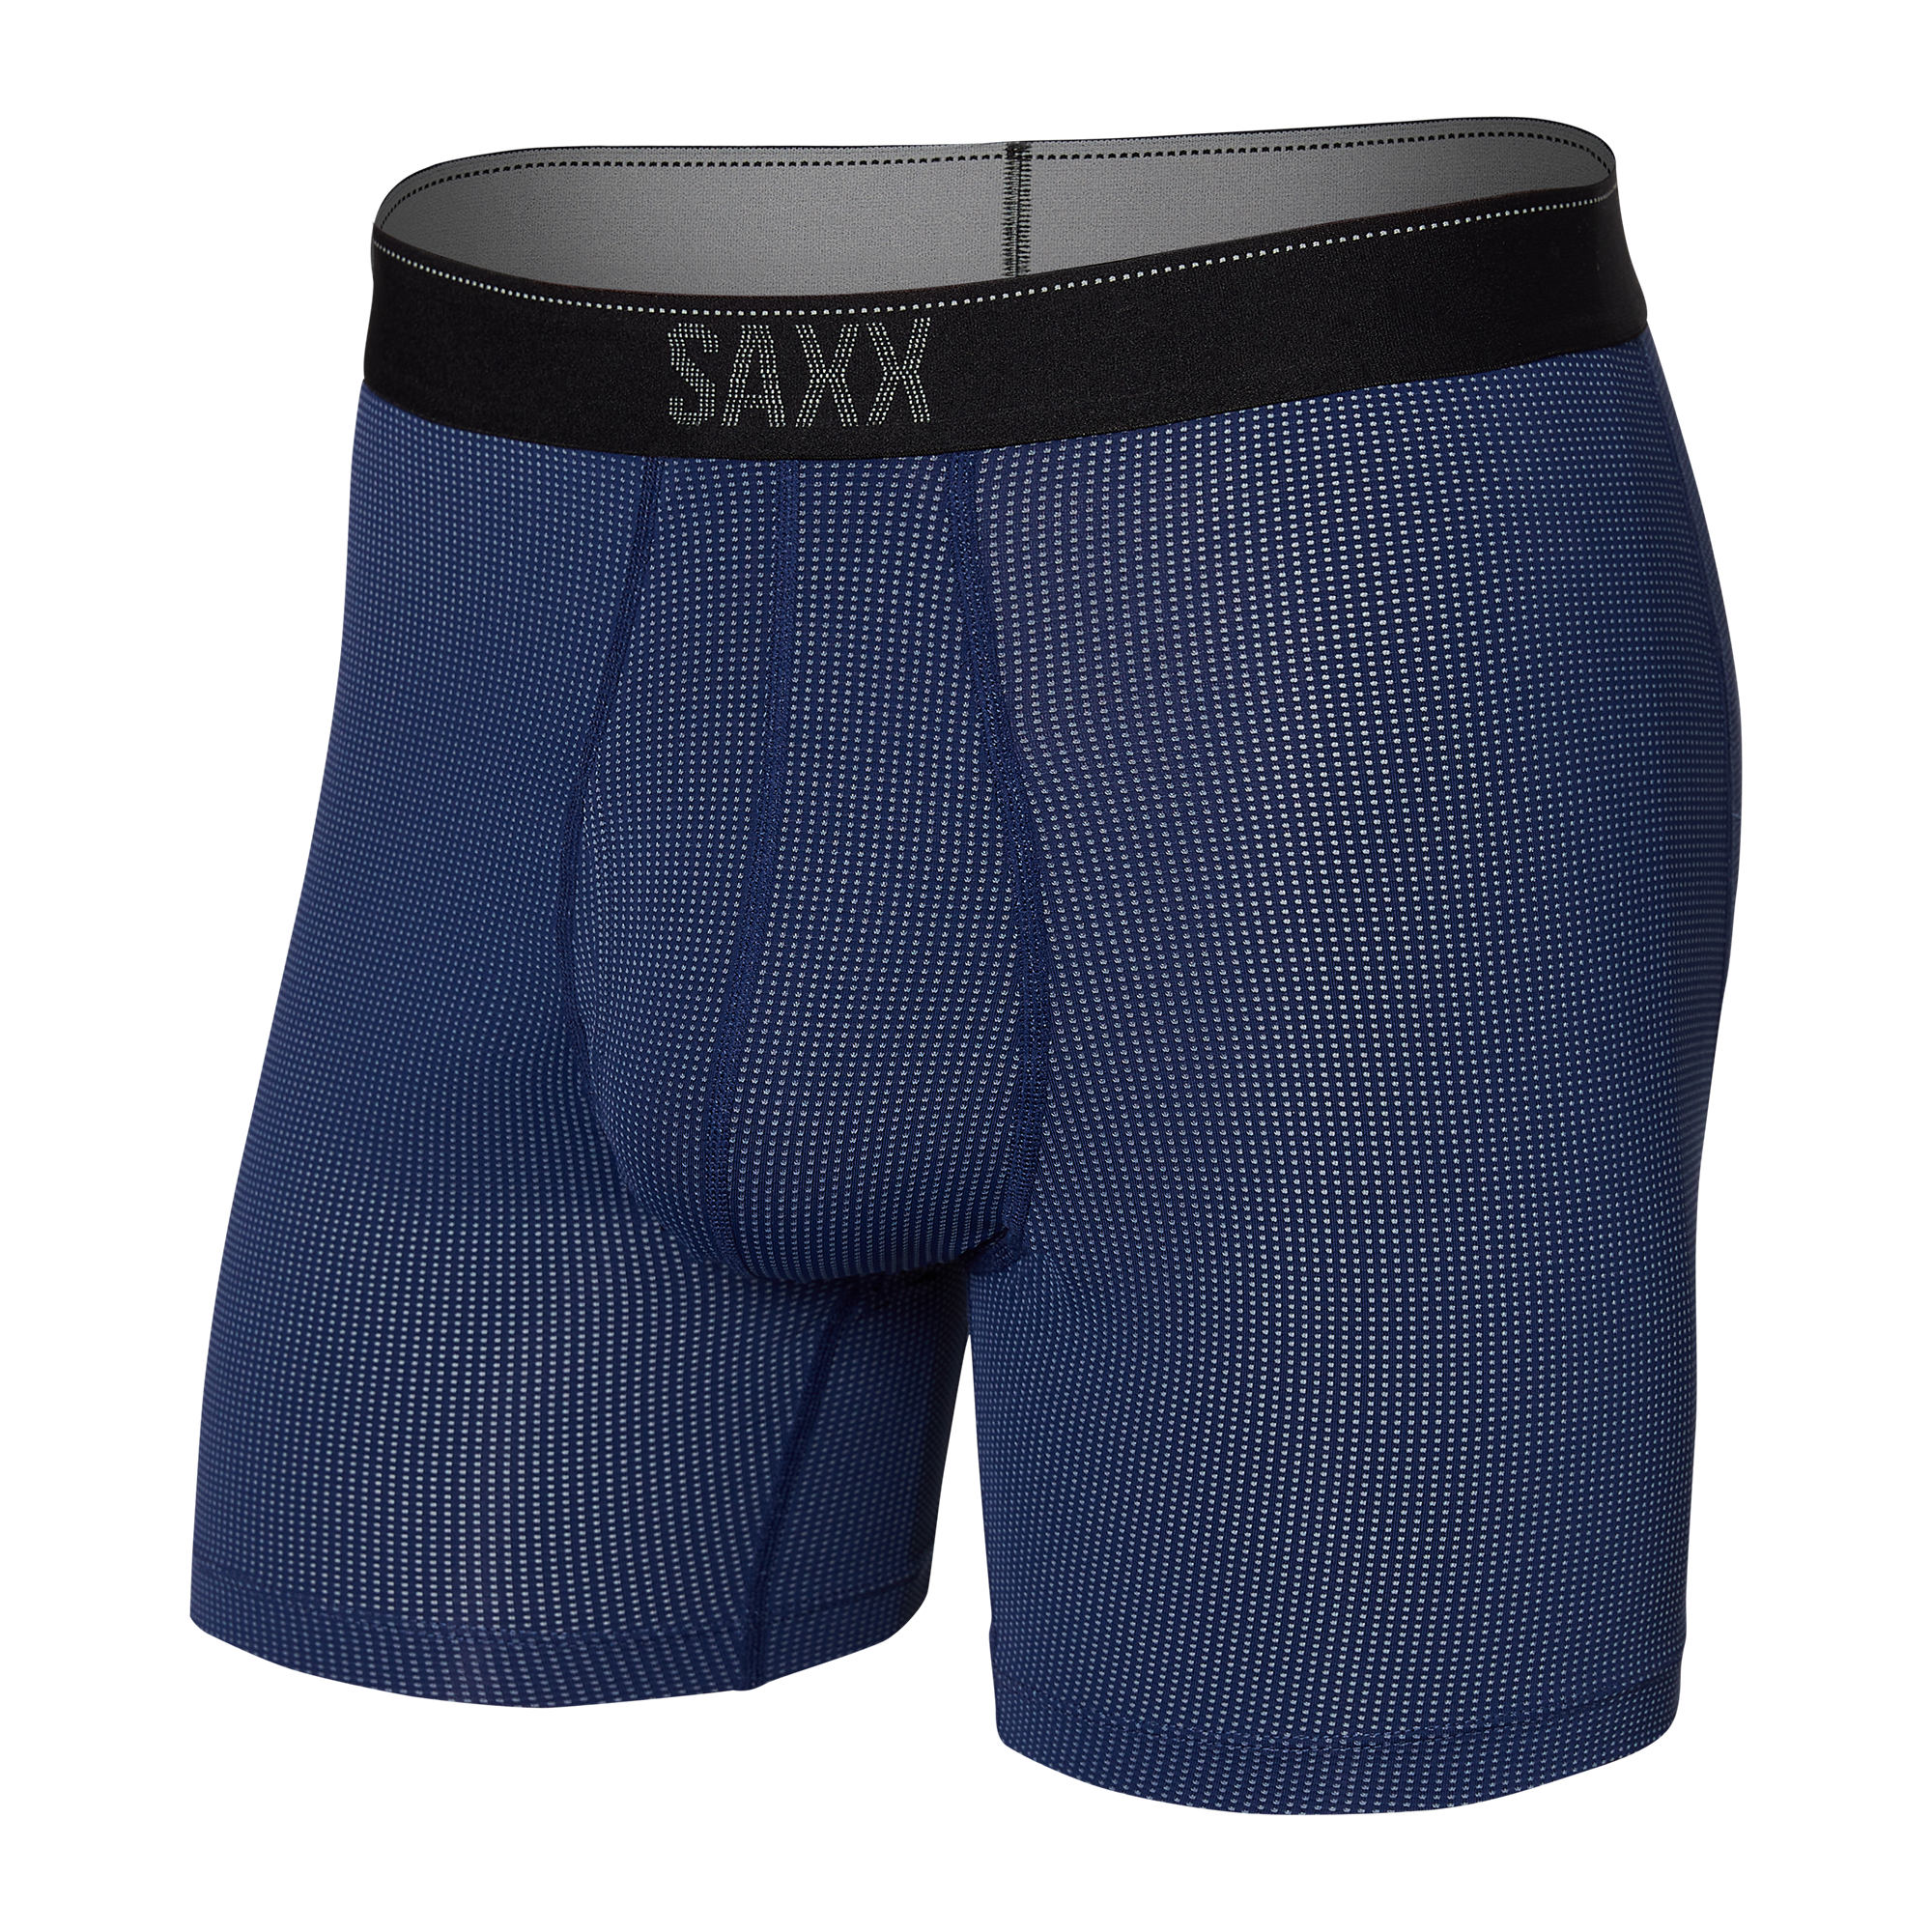 Saxx Vibe Boxer Brief 2pk Bench Brawl/Navy(BBN) - Miladys Lace